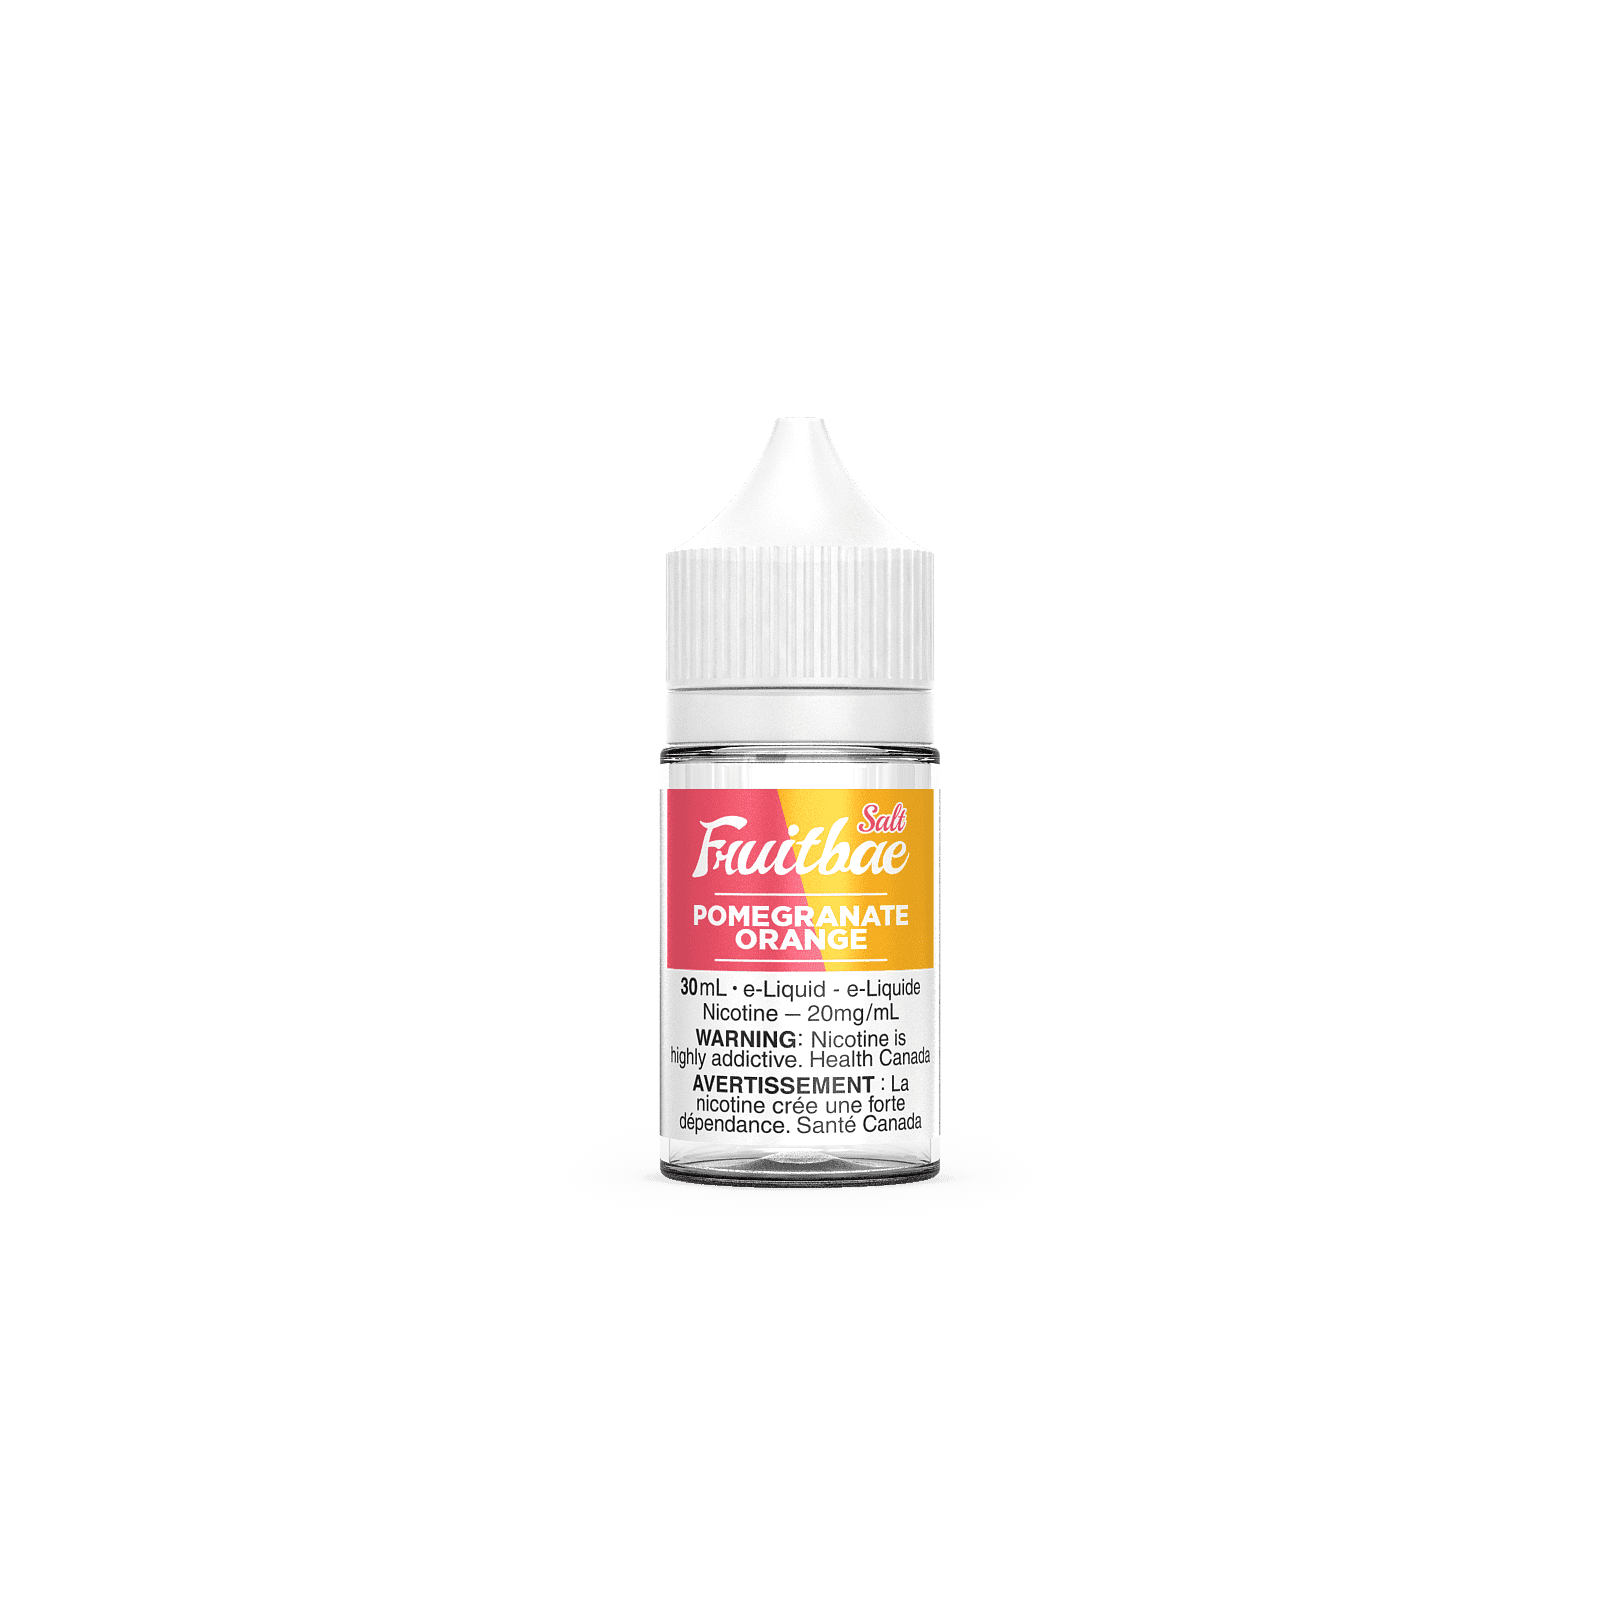 POMEGRANATE ORANGE BY FRUITBAE SALT (30mL) - Smoke FX